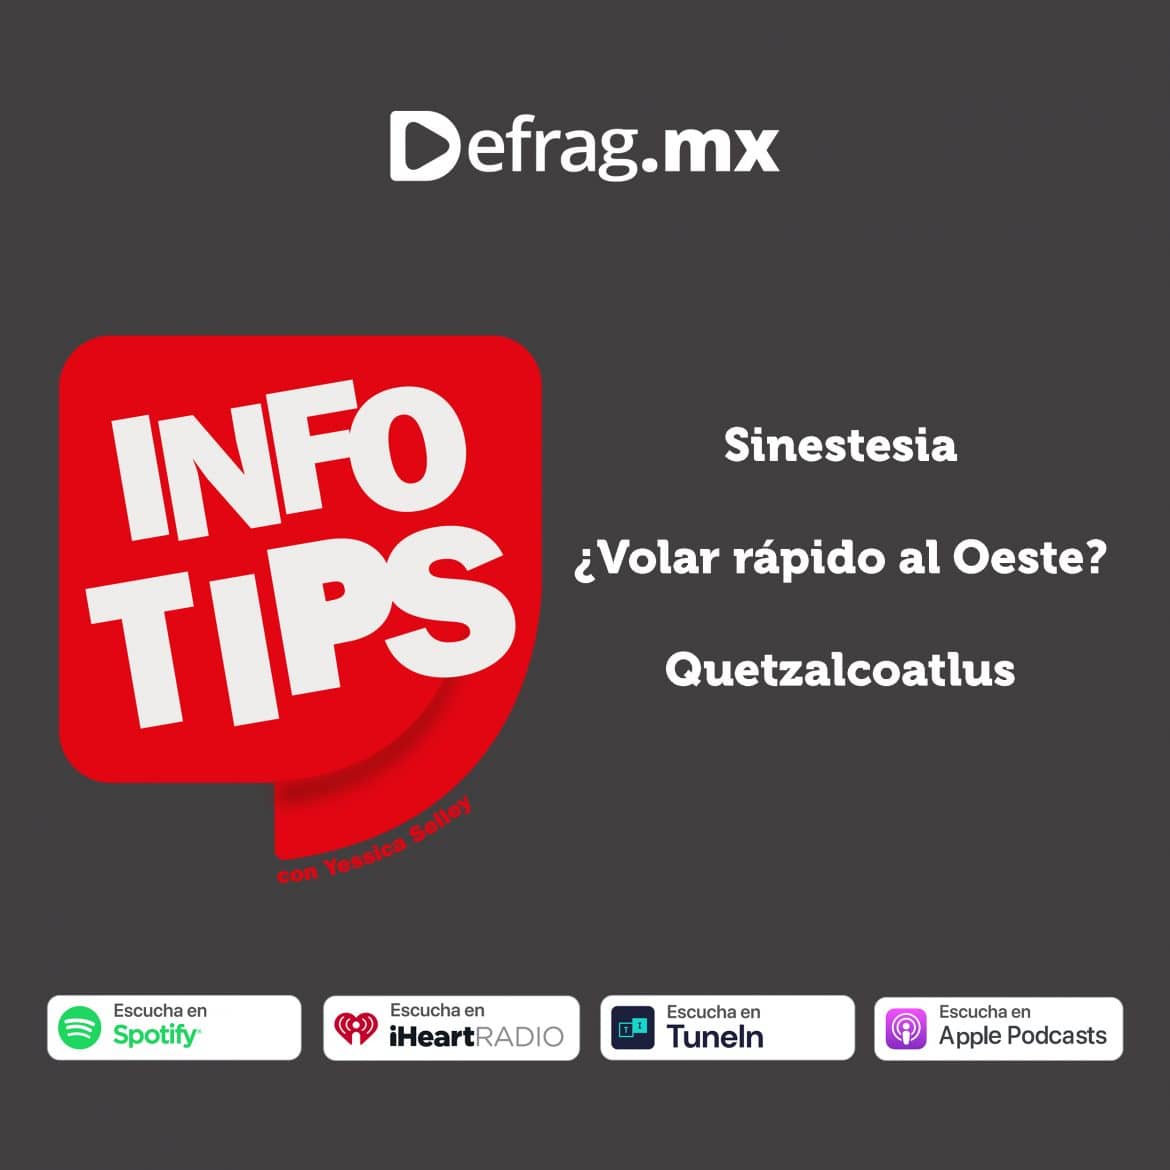 Defrag.mx Podcast InfoTips Sinestesia Volar Rapido al Oeste Quetzalcoatlus